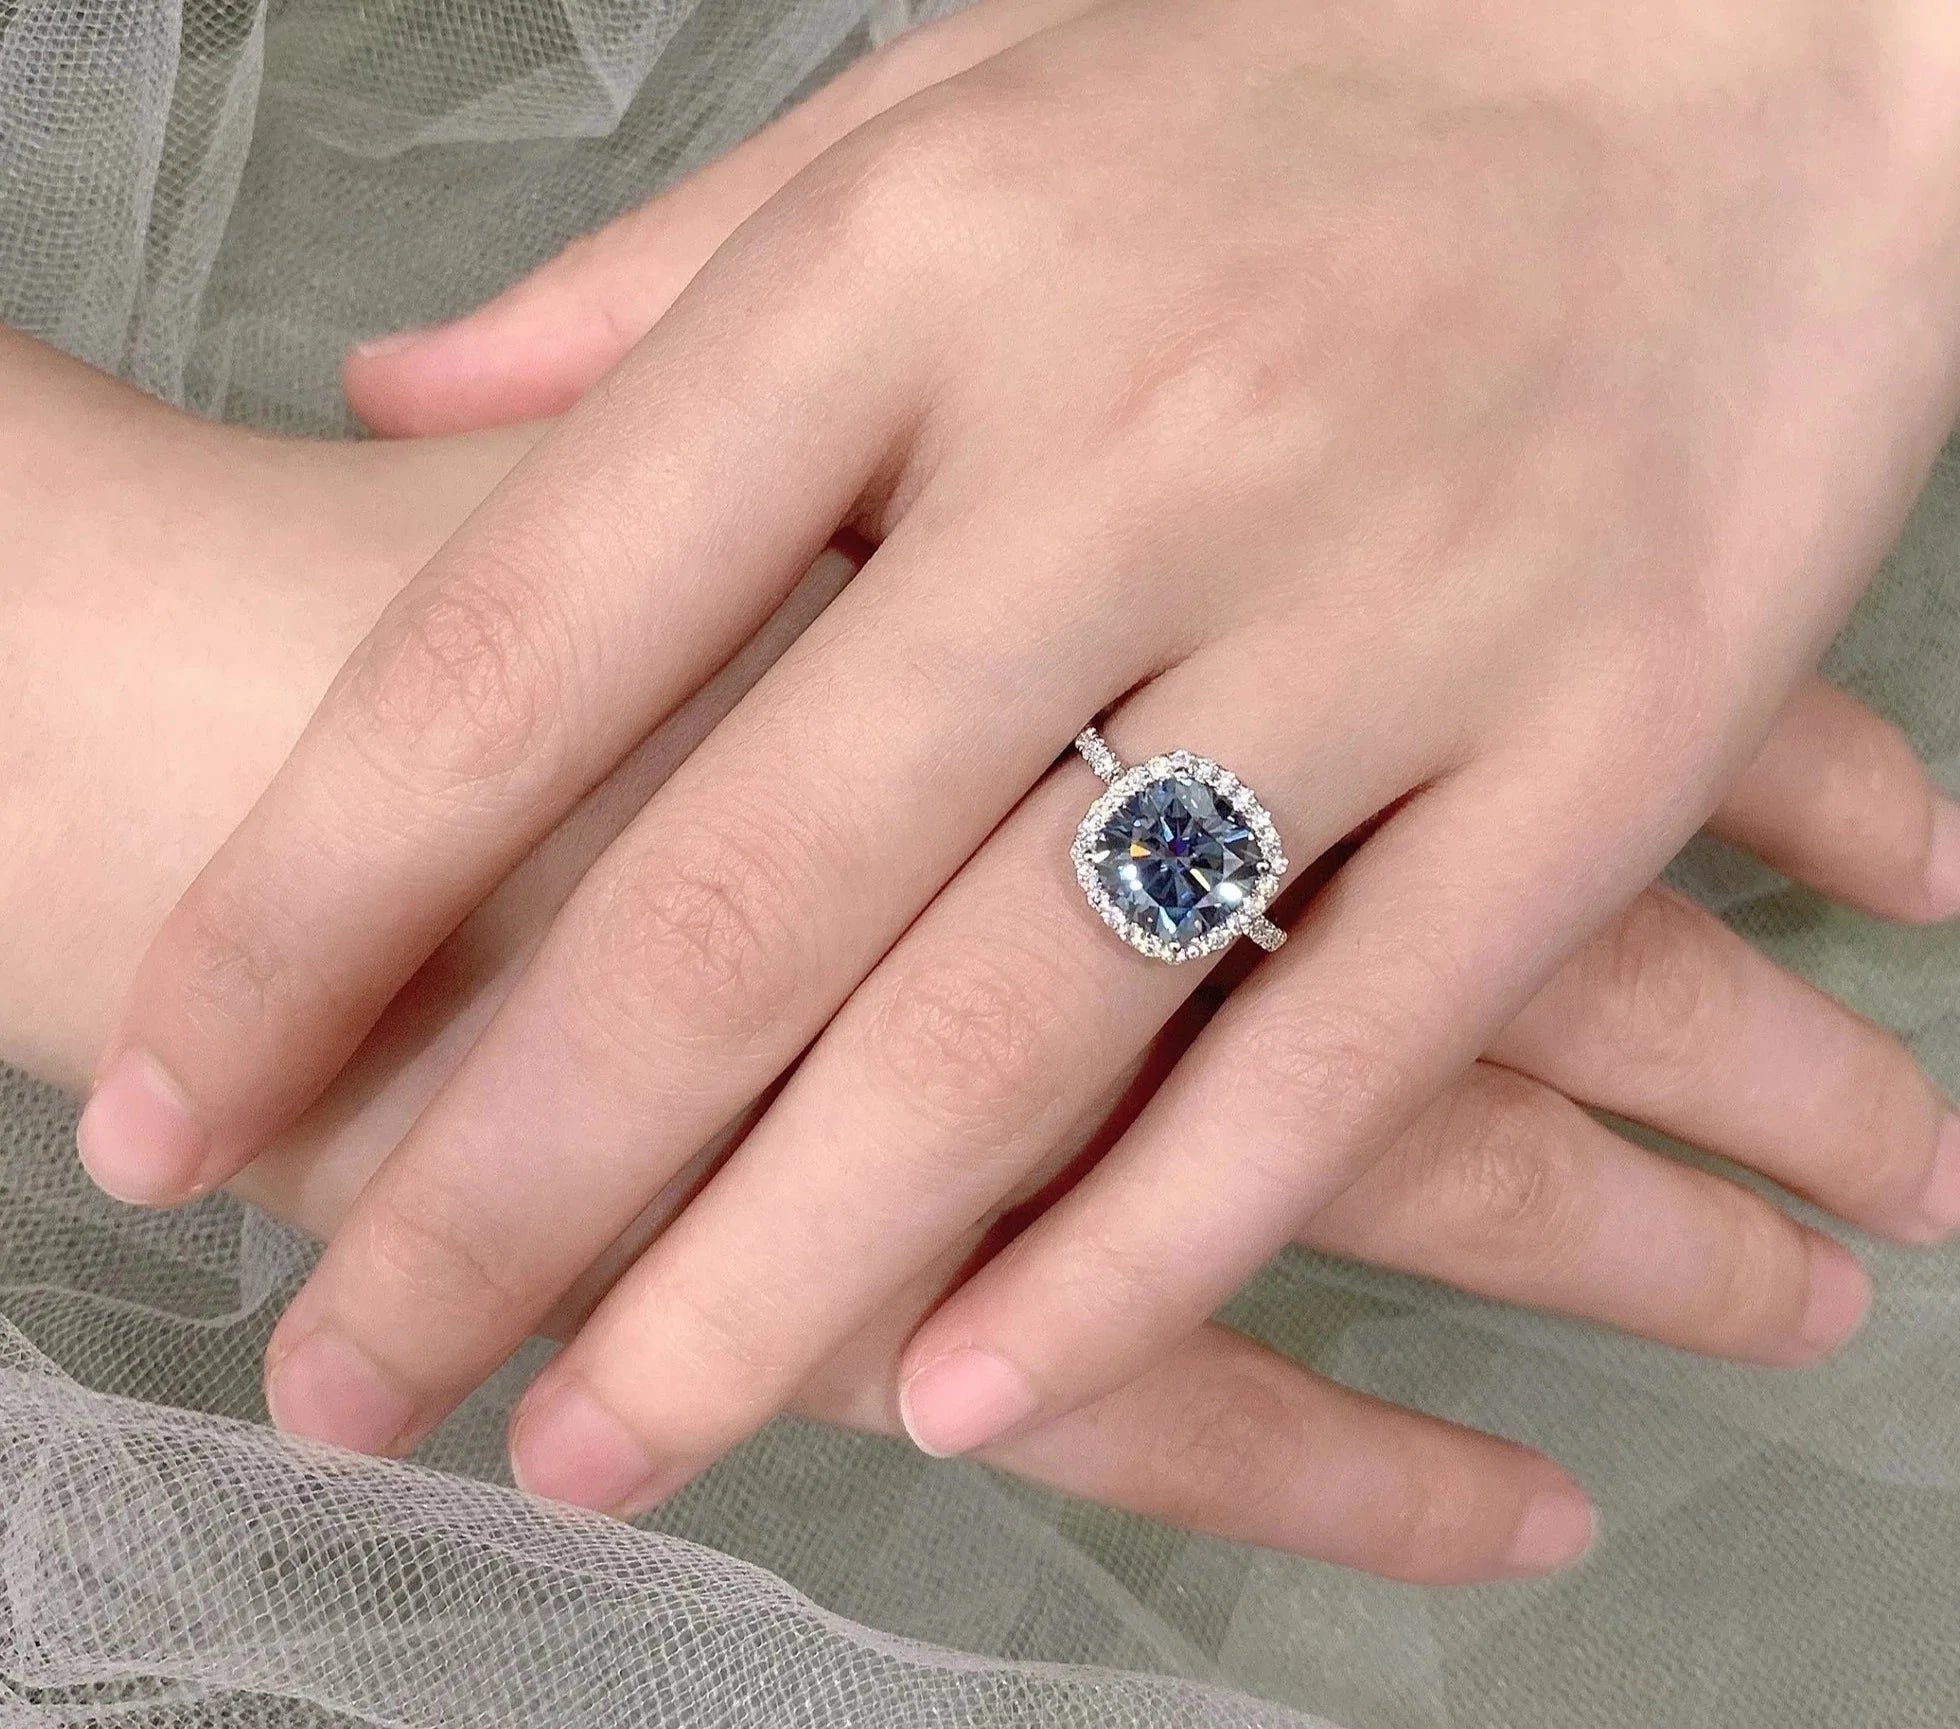 4.5 Carat Cushion Cut Blue Moissanite Halo Engagement Ring in 18 Karat White Gold - Boutique Pavè